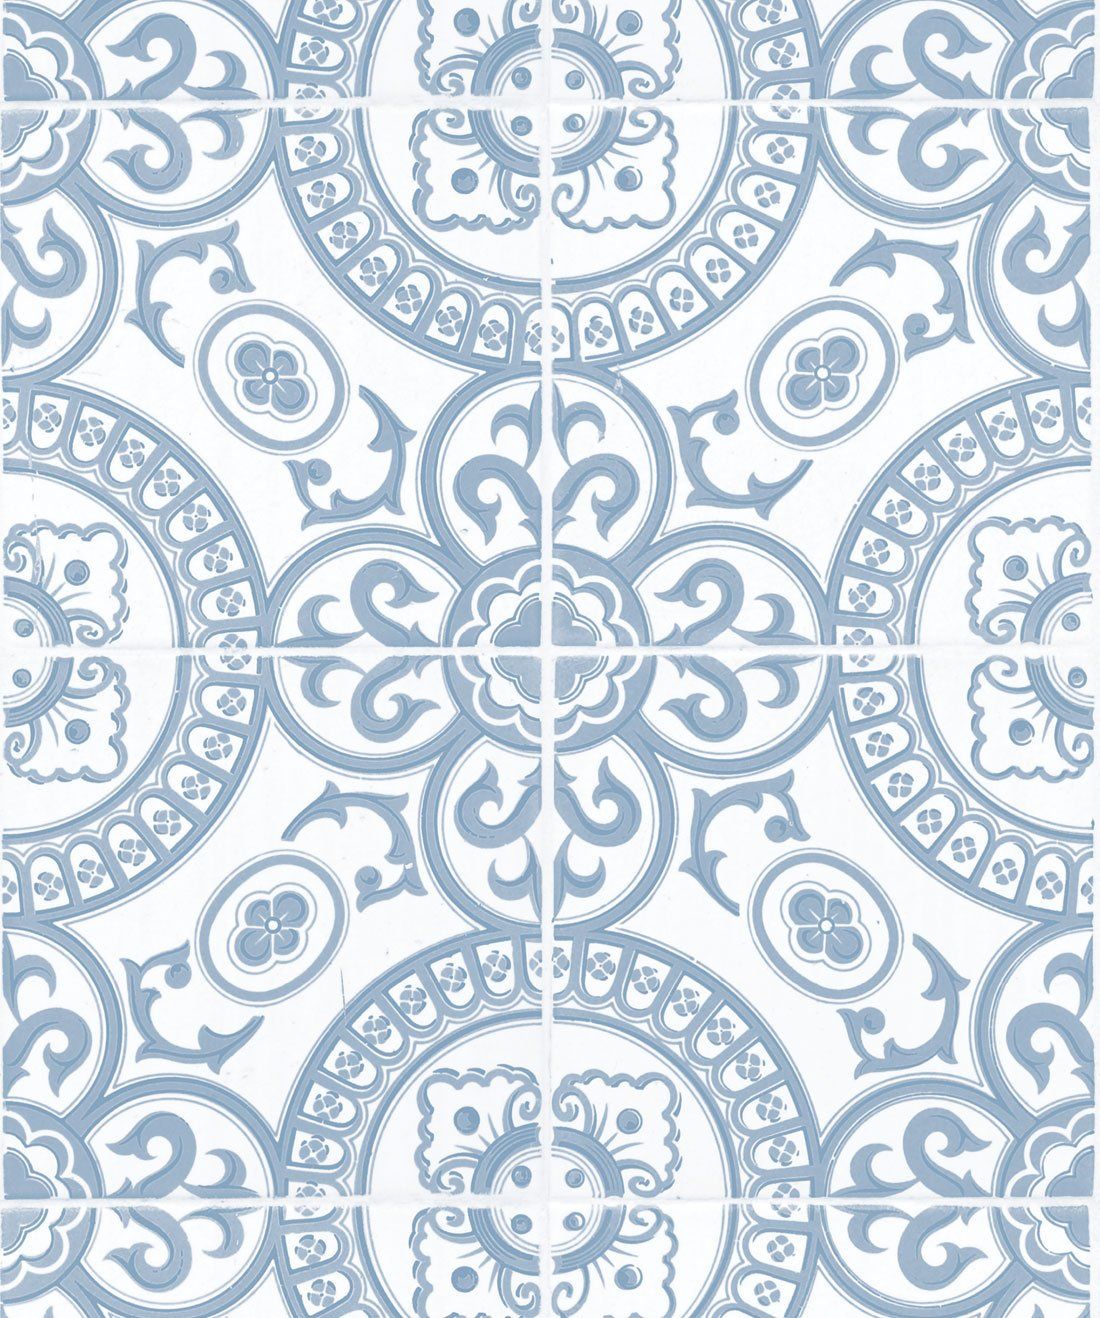 Heritage Tiles Wallpaper in Pale Blue .burkedecor.com · In stock